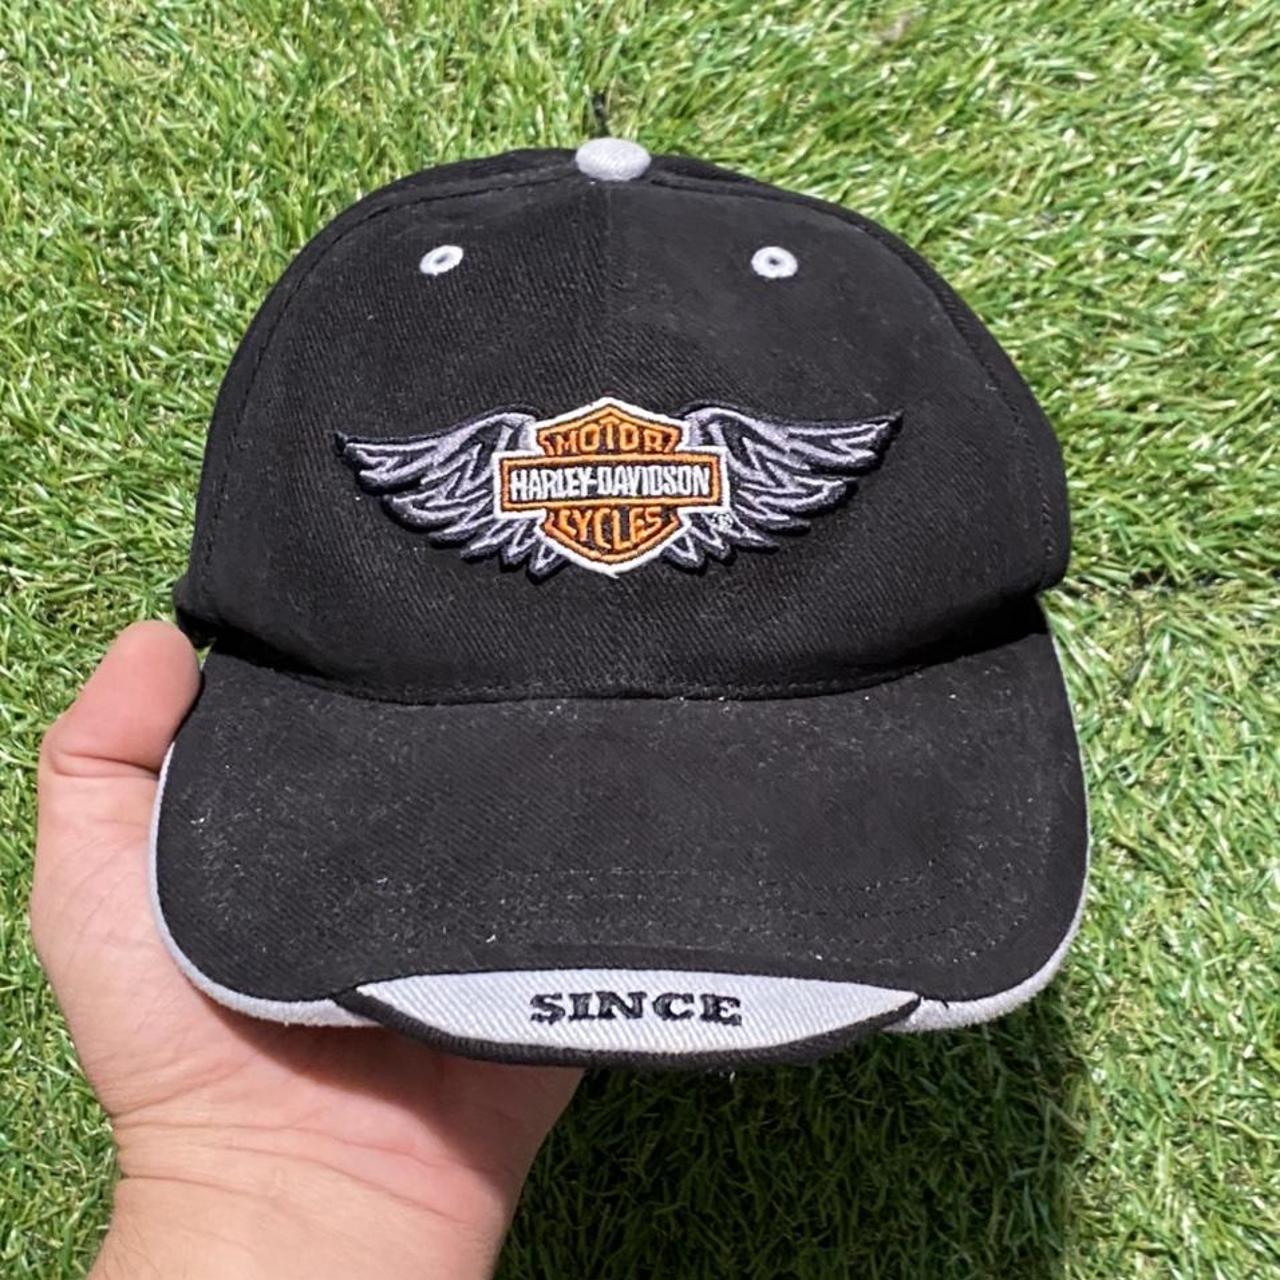 Product Image 1 - Harley Davidson Hat Black Based